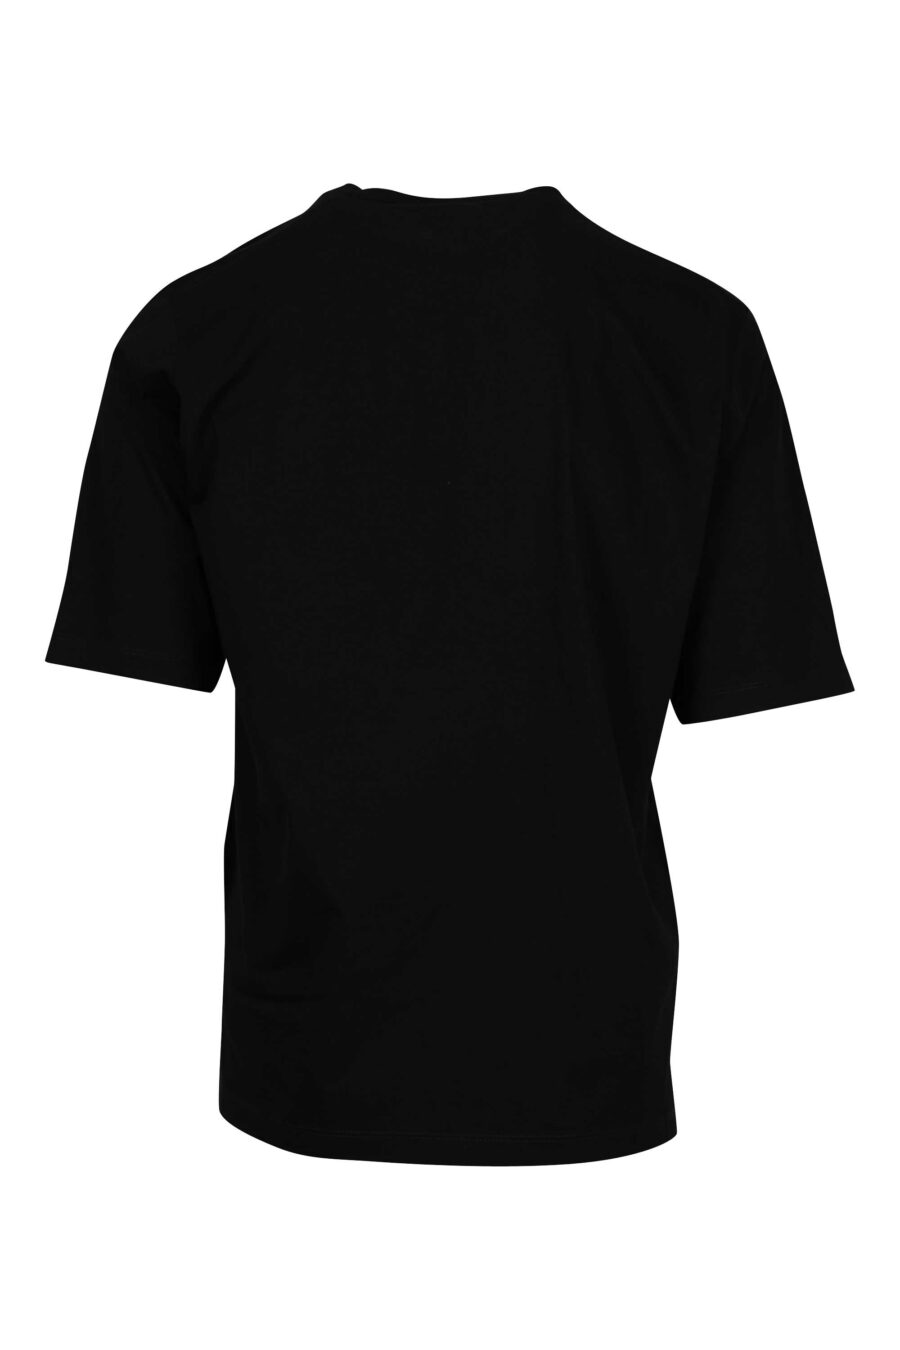 Camiseta negra con maxilogo "canadian team 1995" - 8054148296957 1